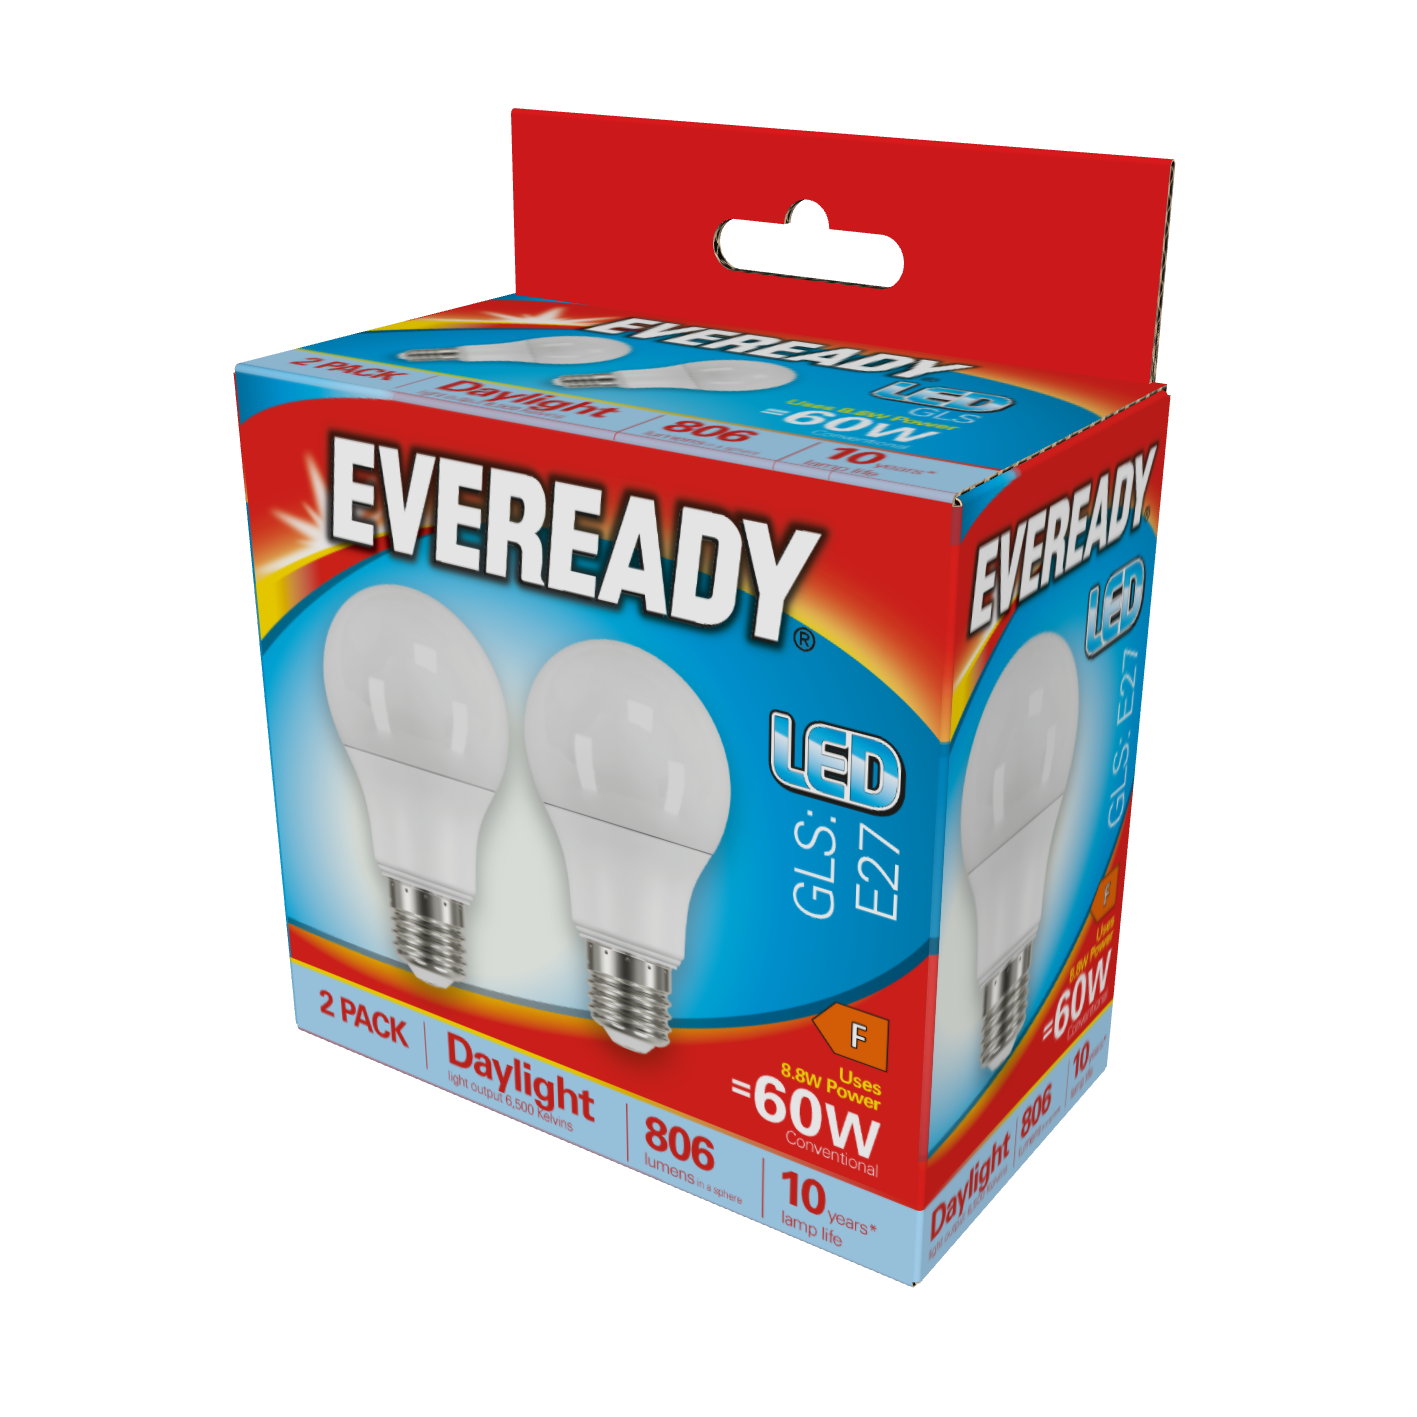 Eveready LED GLS E27 (ES) 806lm 8.8W 6,500K (Daylight), Box of 2